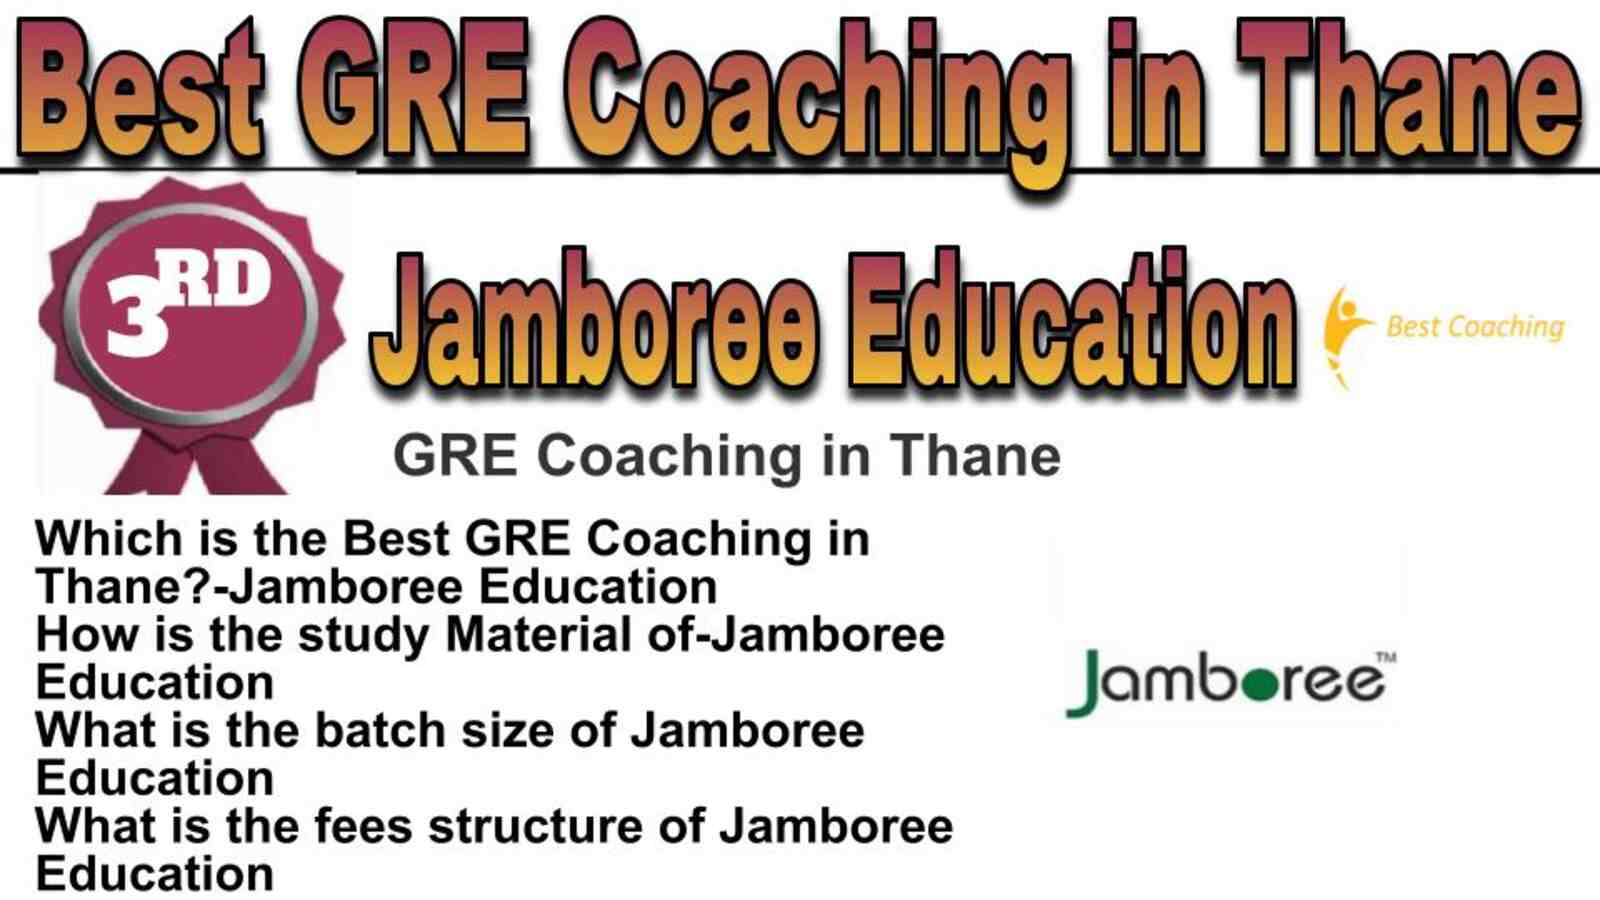 Rank 3 best GRE coaching in Thane